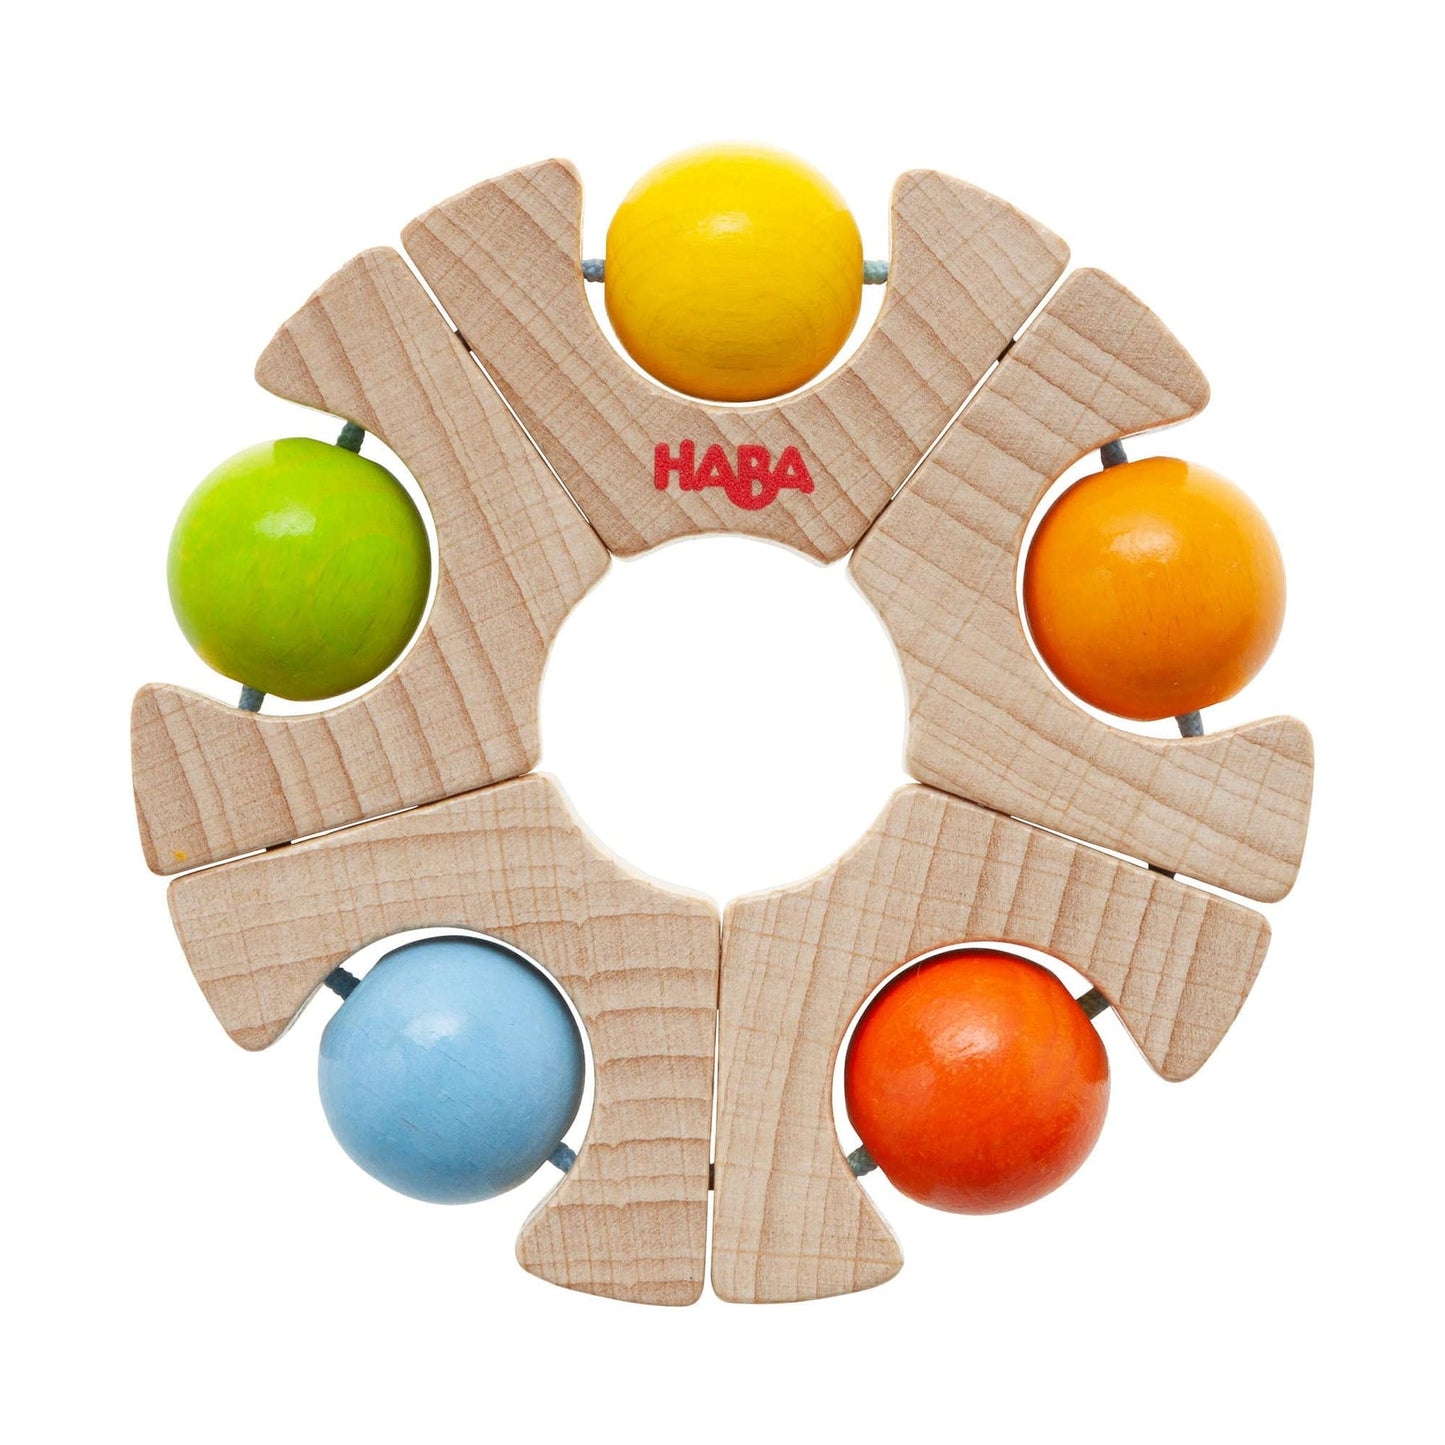 Haba Haba Ball Wheel Grasping Toy - blueottertoys-HB306692